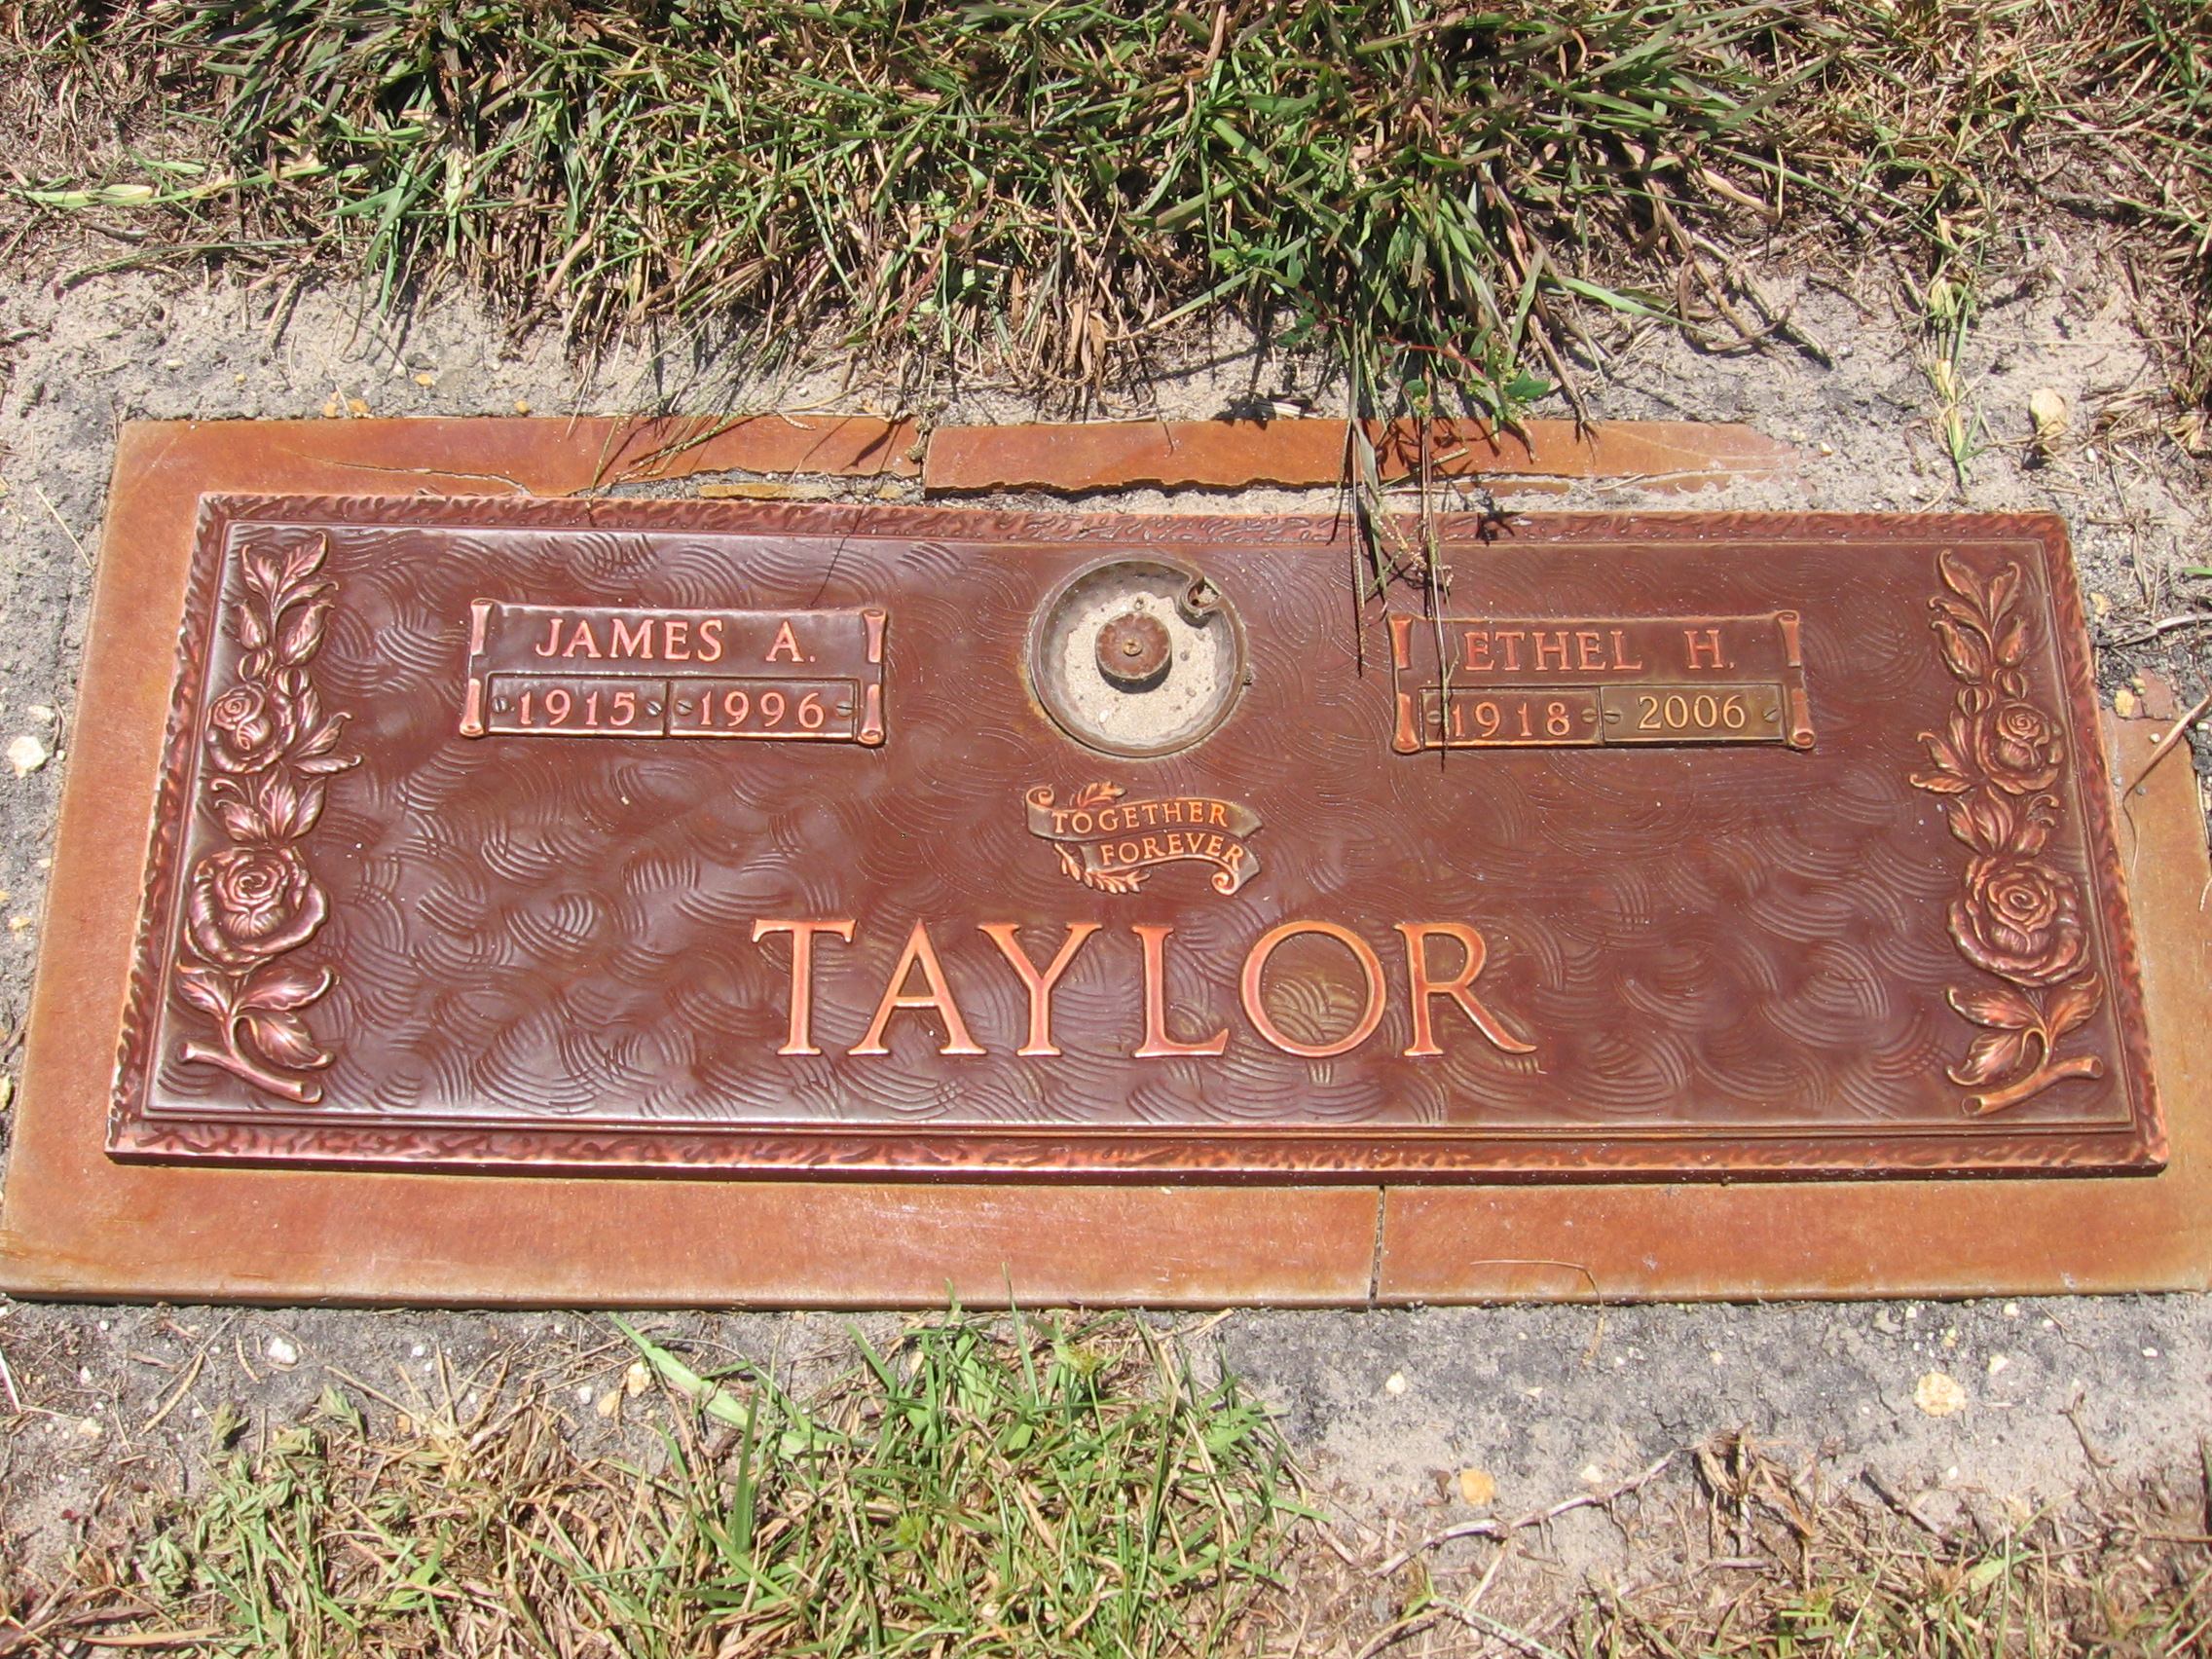 Ethel H Taylor